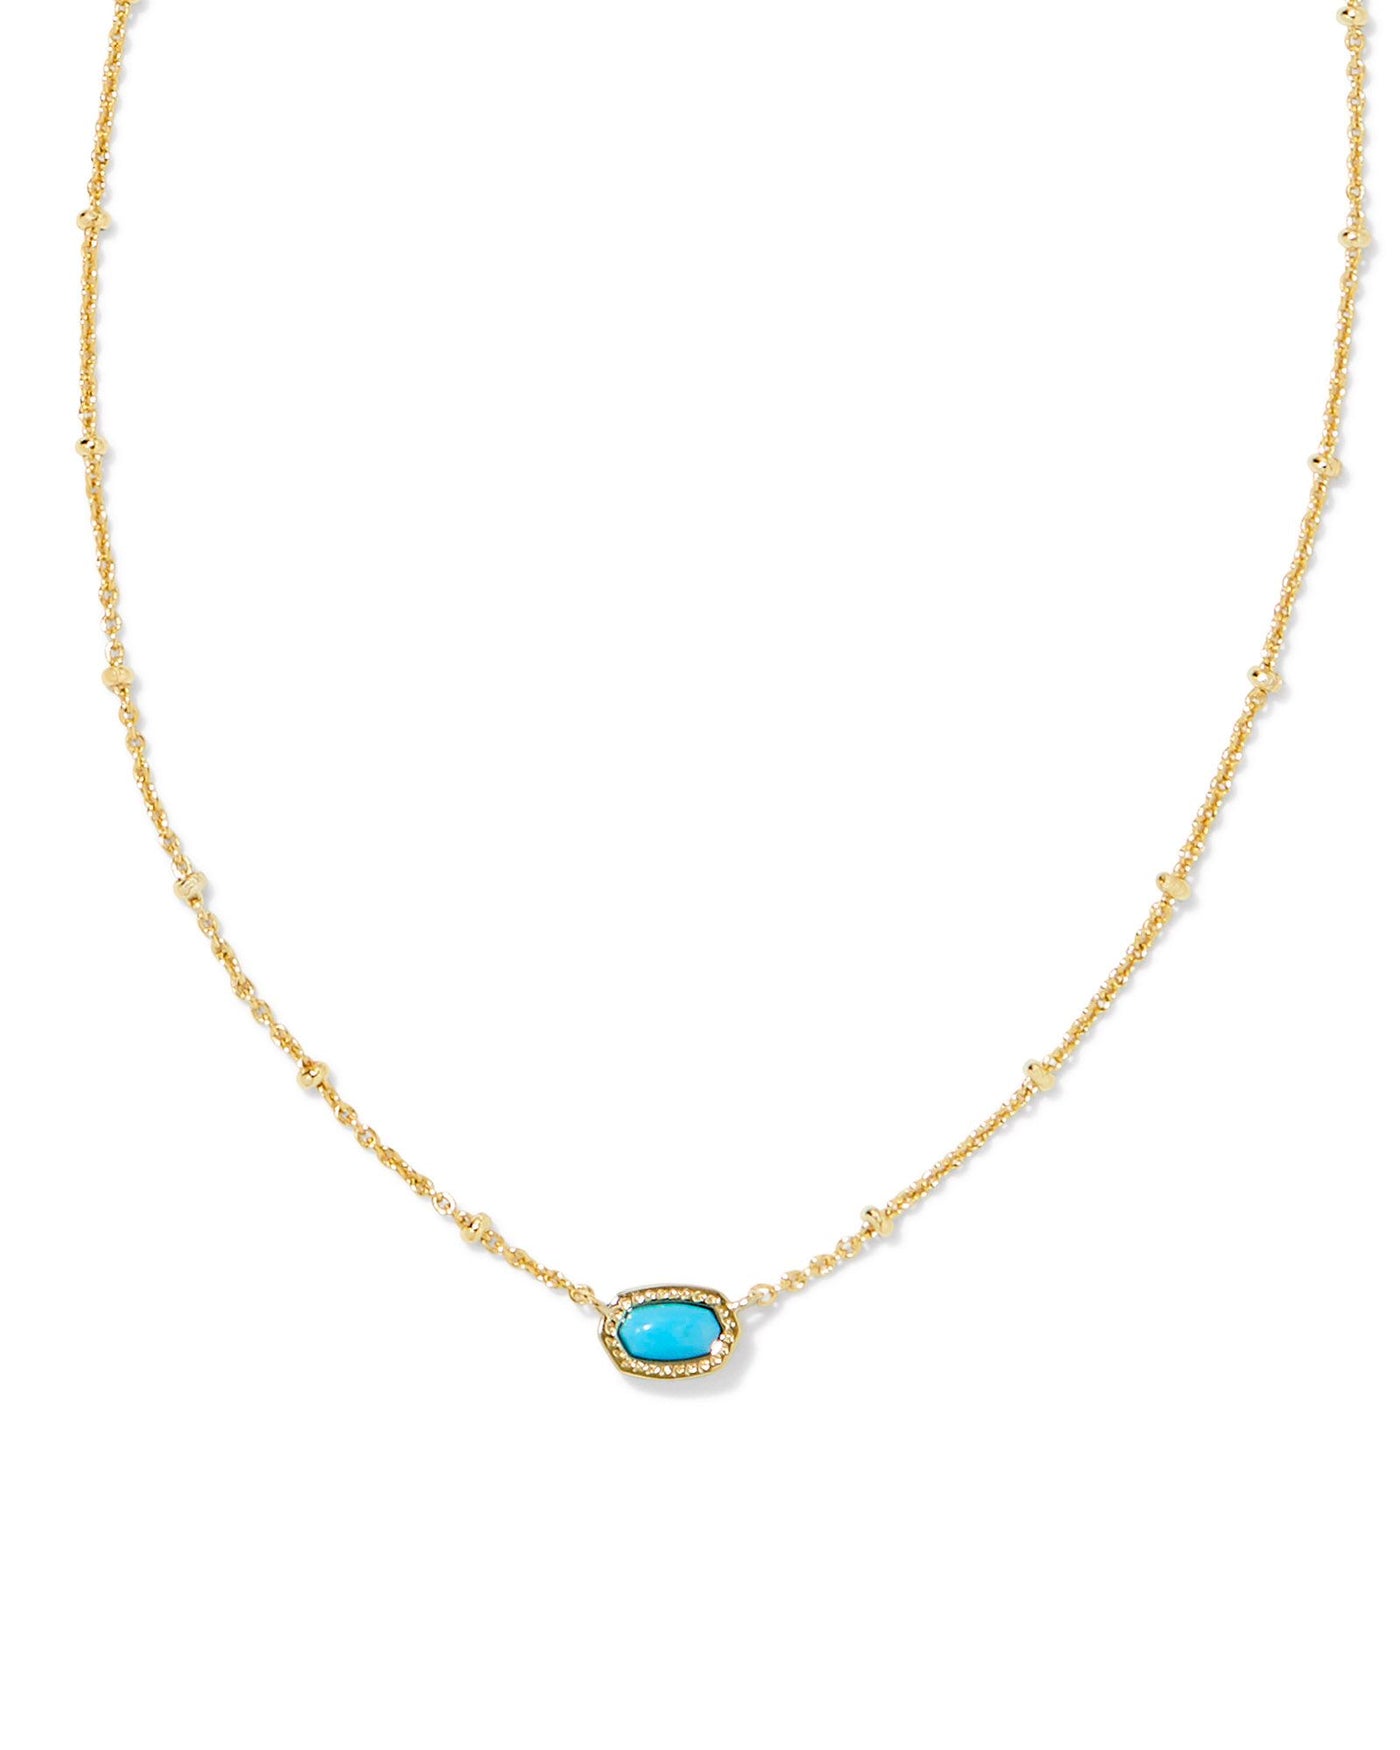 Kendra Scott Mini Elisa Satellite Necklace in Gold Turquoise on white background close up.